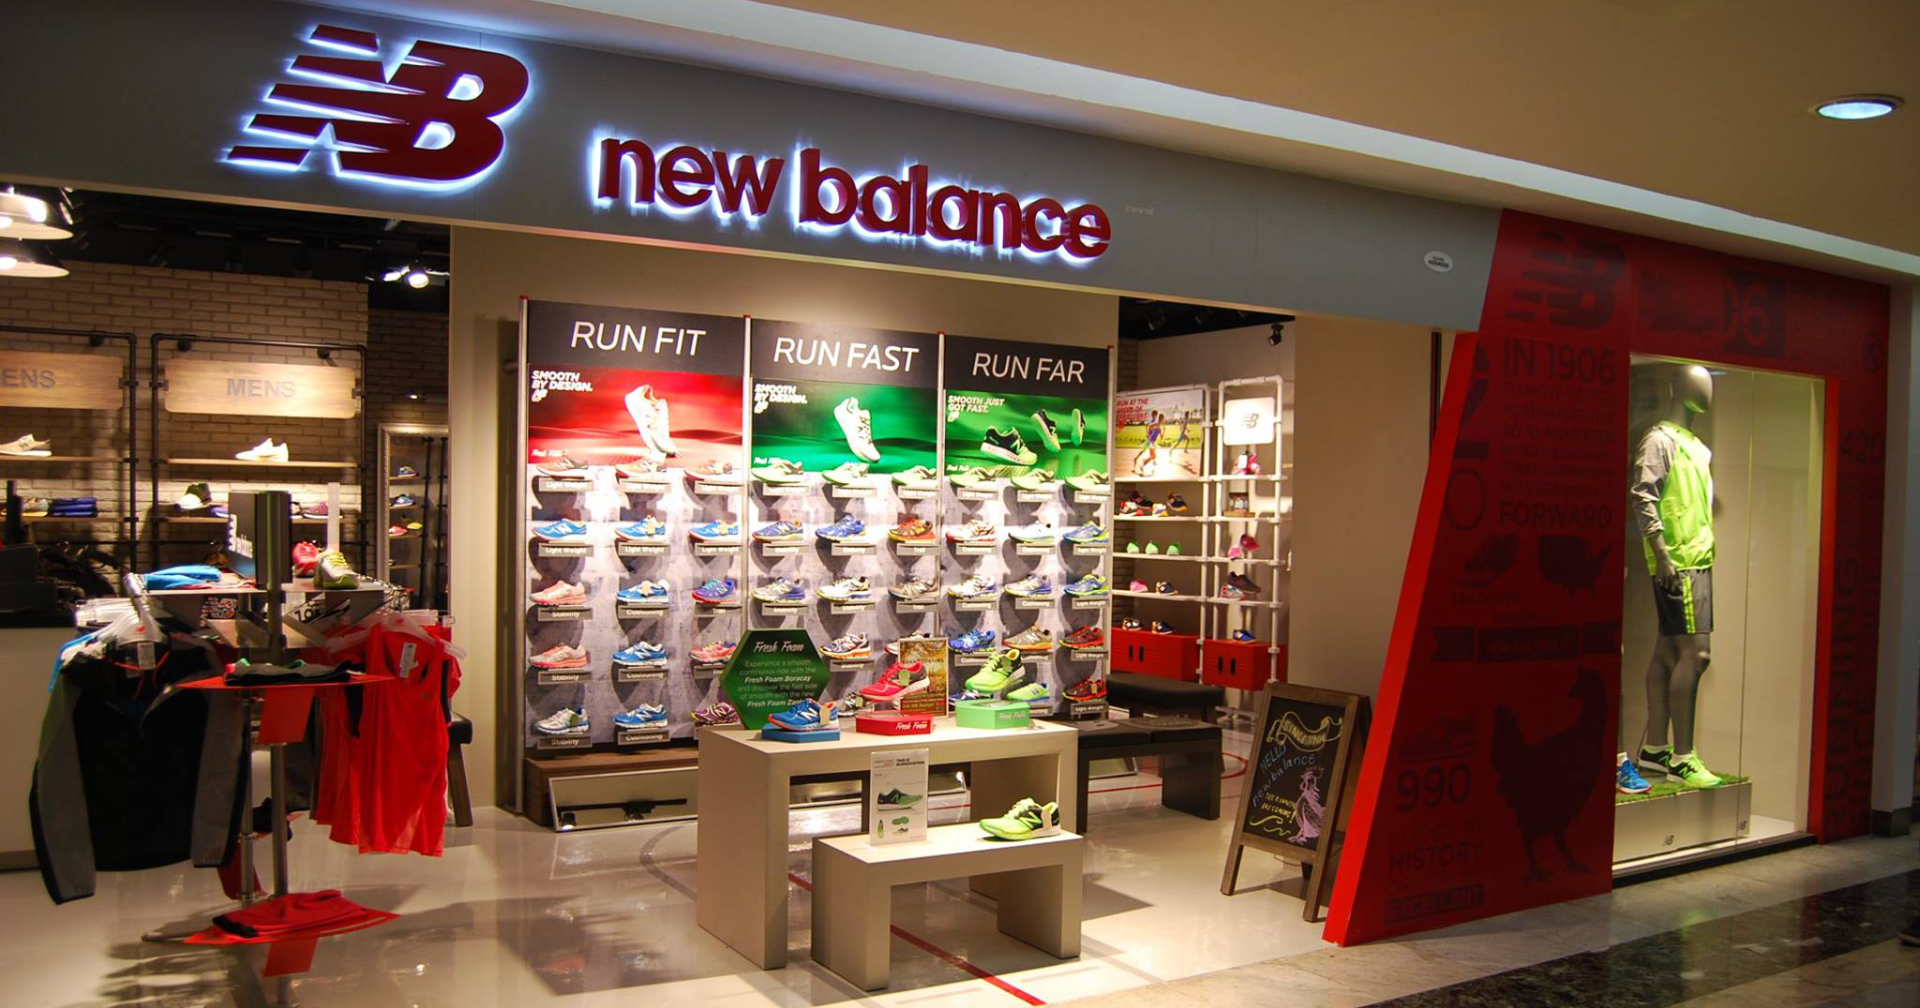 New Balance ปิดกิจการในไทย หลังหมดสัญญา จับตาผู้นำเข้ารายใหม่ไตรมาส 4 ปีนี้